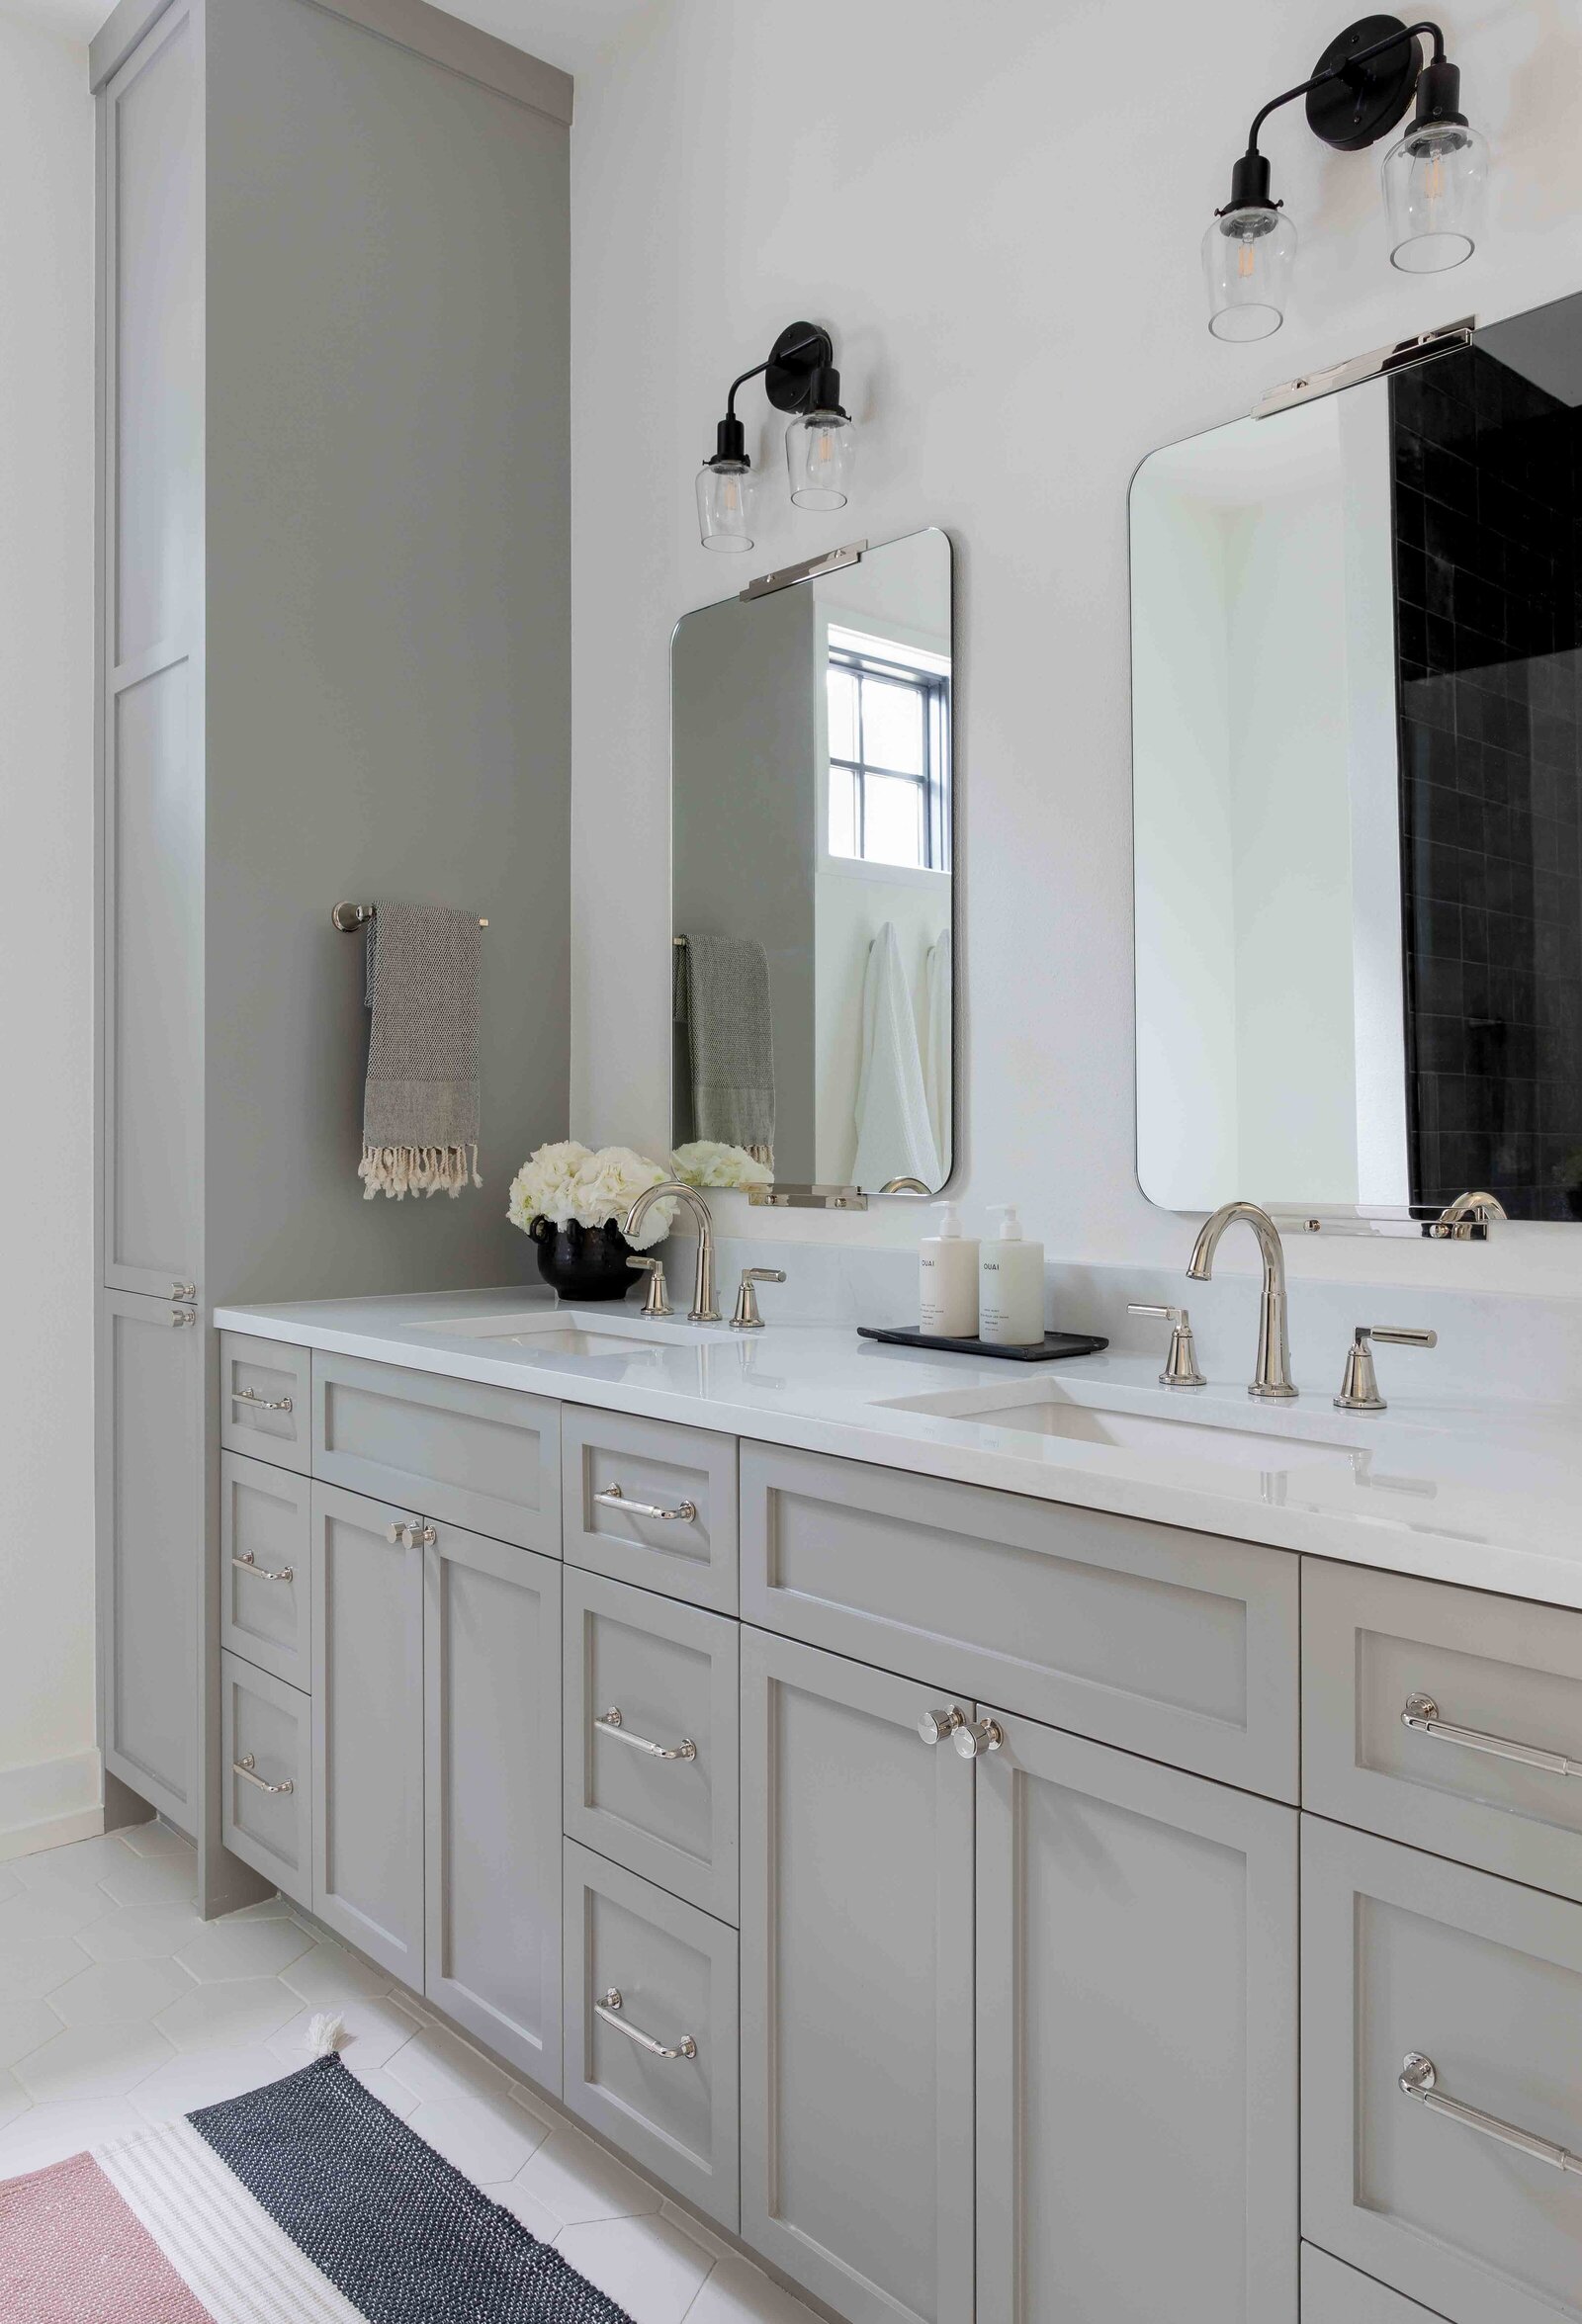 Nuela Designs-Gray Cabinets and White Countertop Bathroom